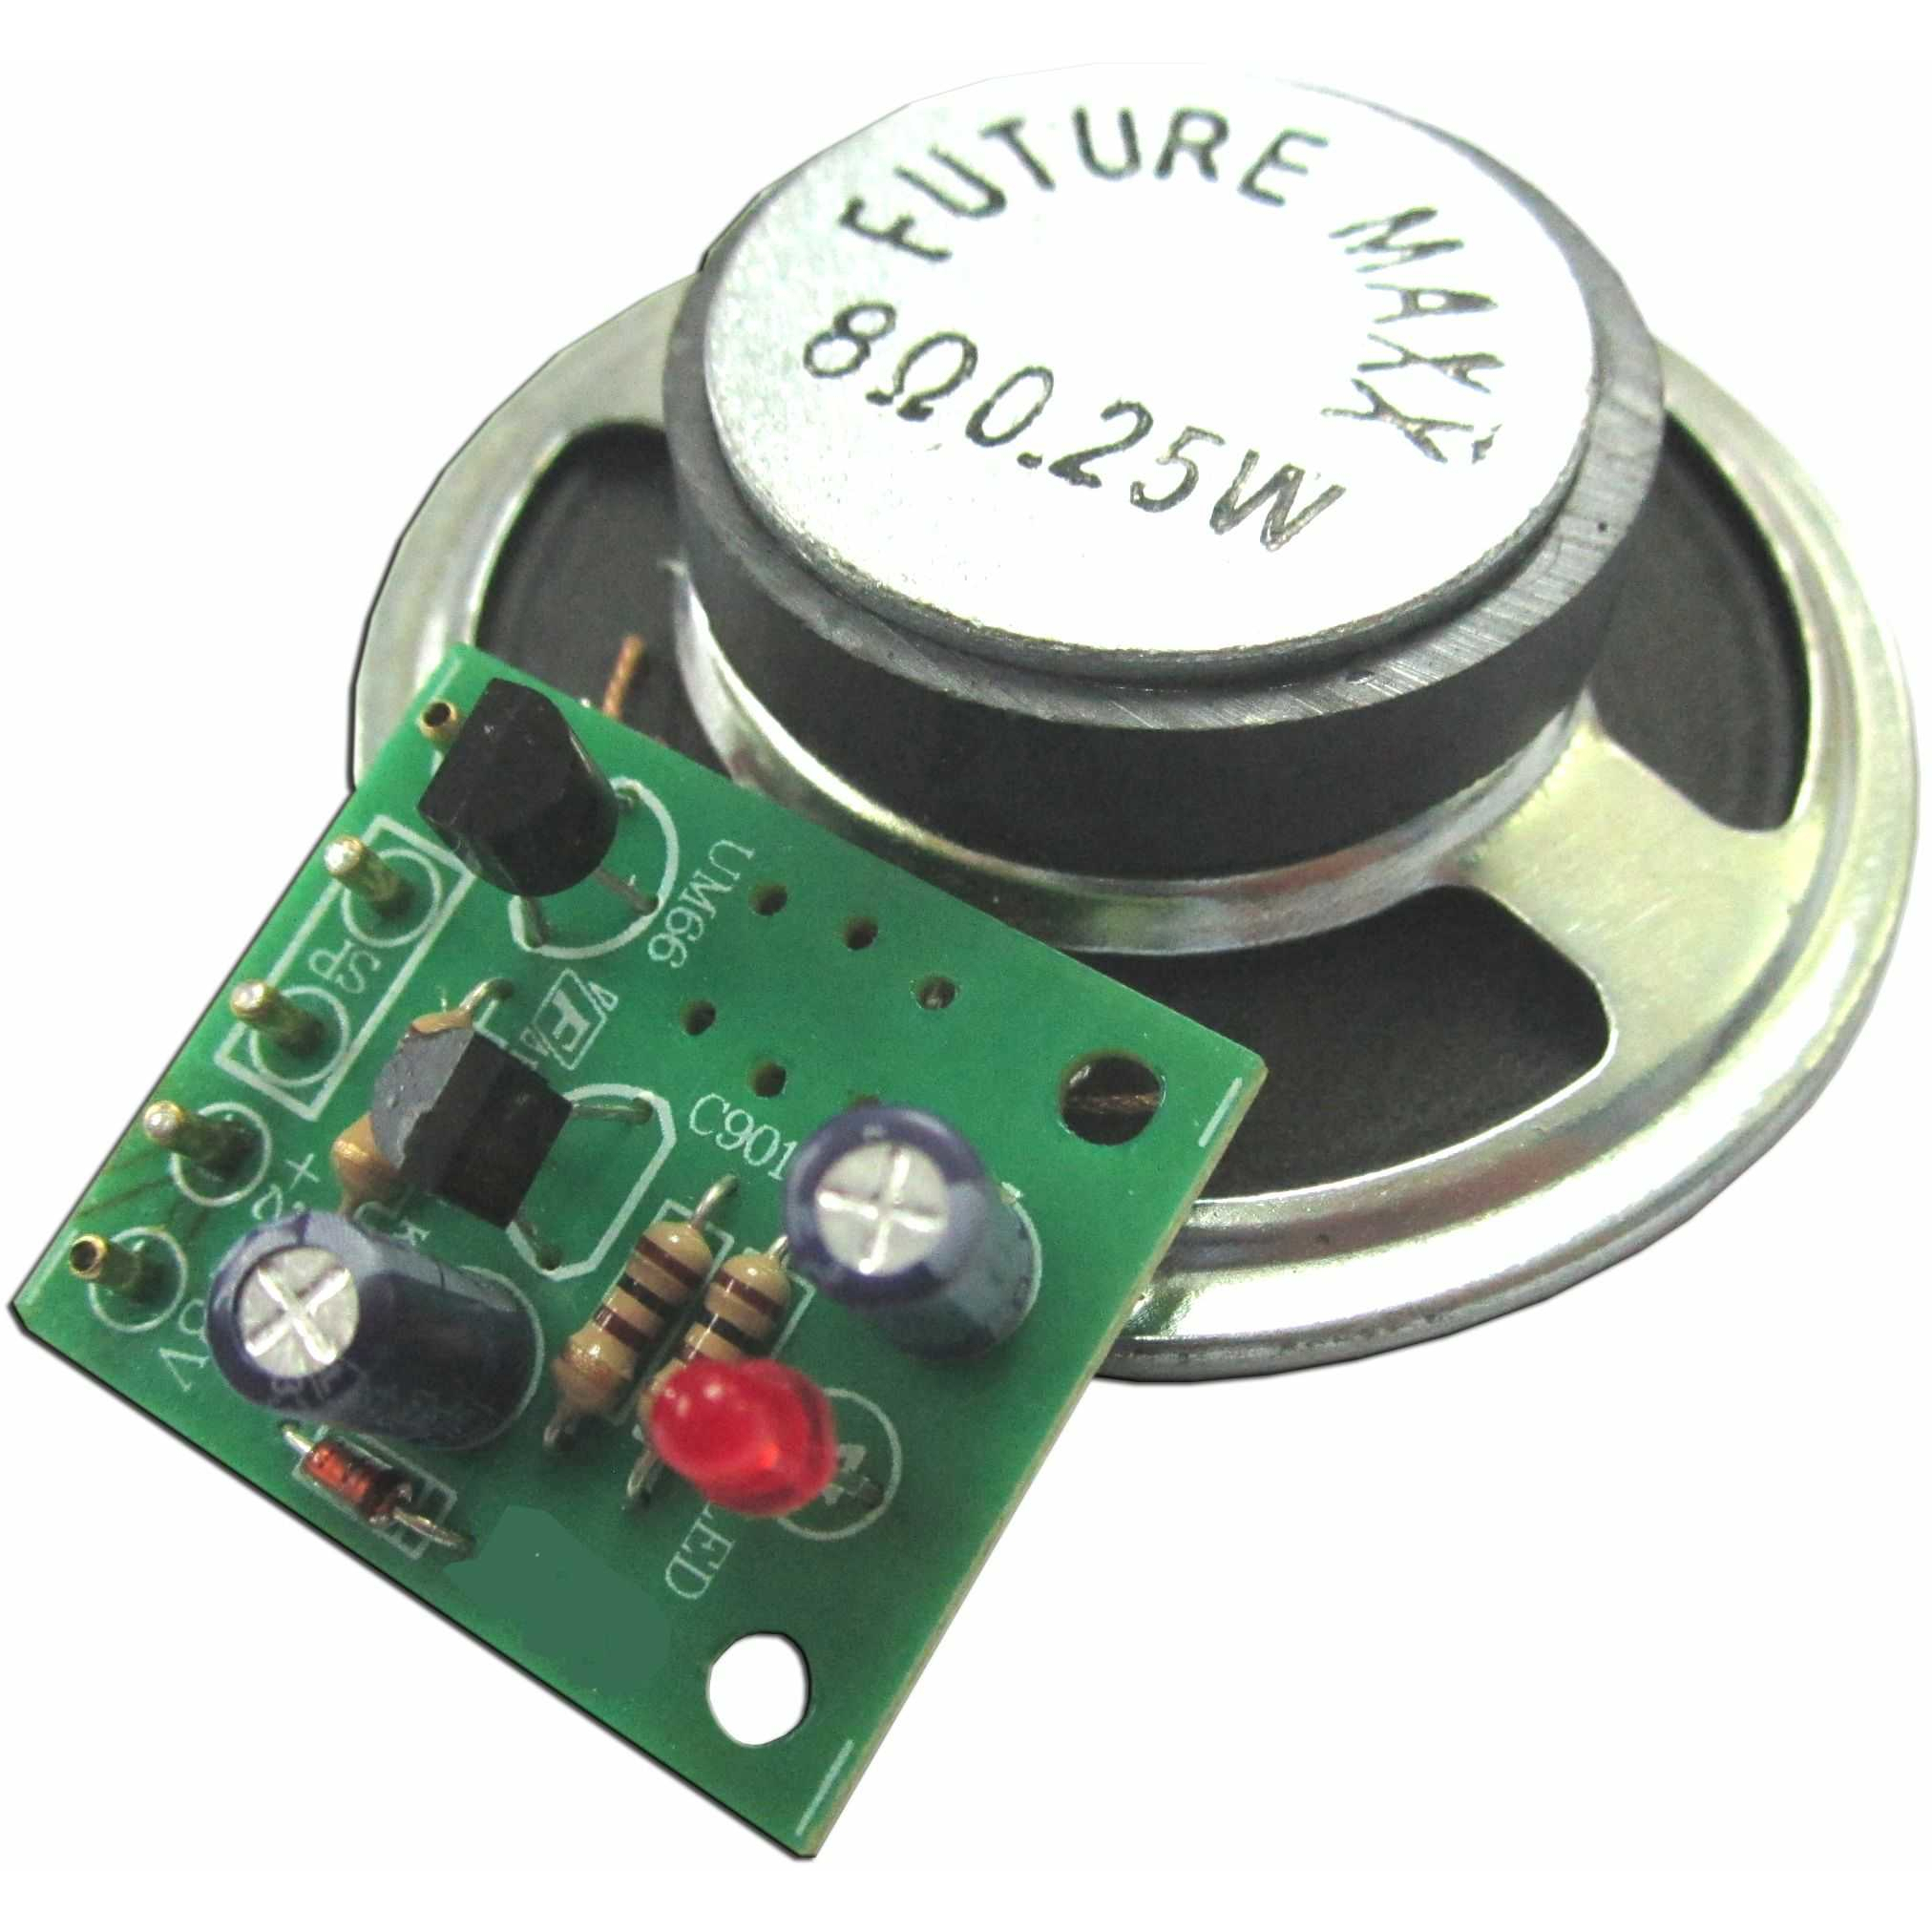 It’s A Small World Tune Generator Spekaer FK Green Image 1